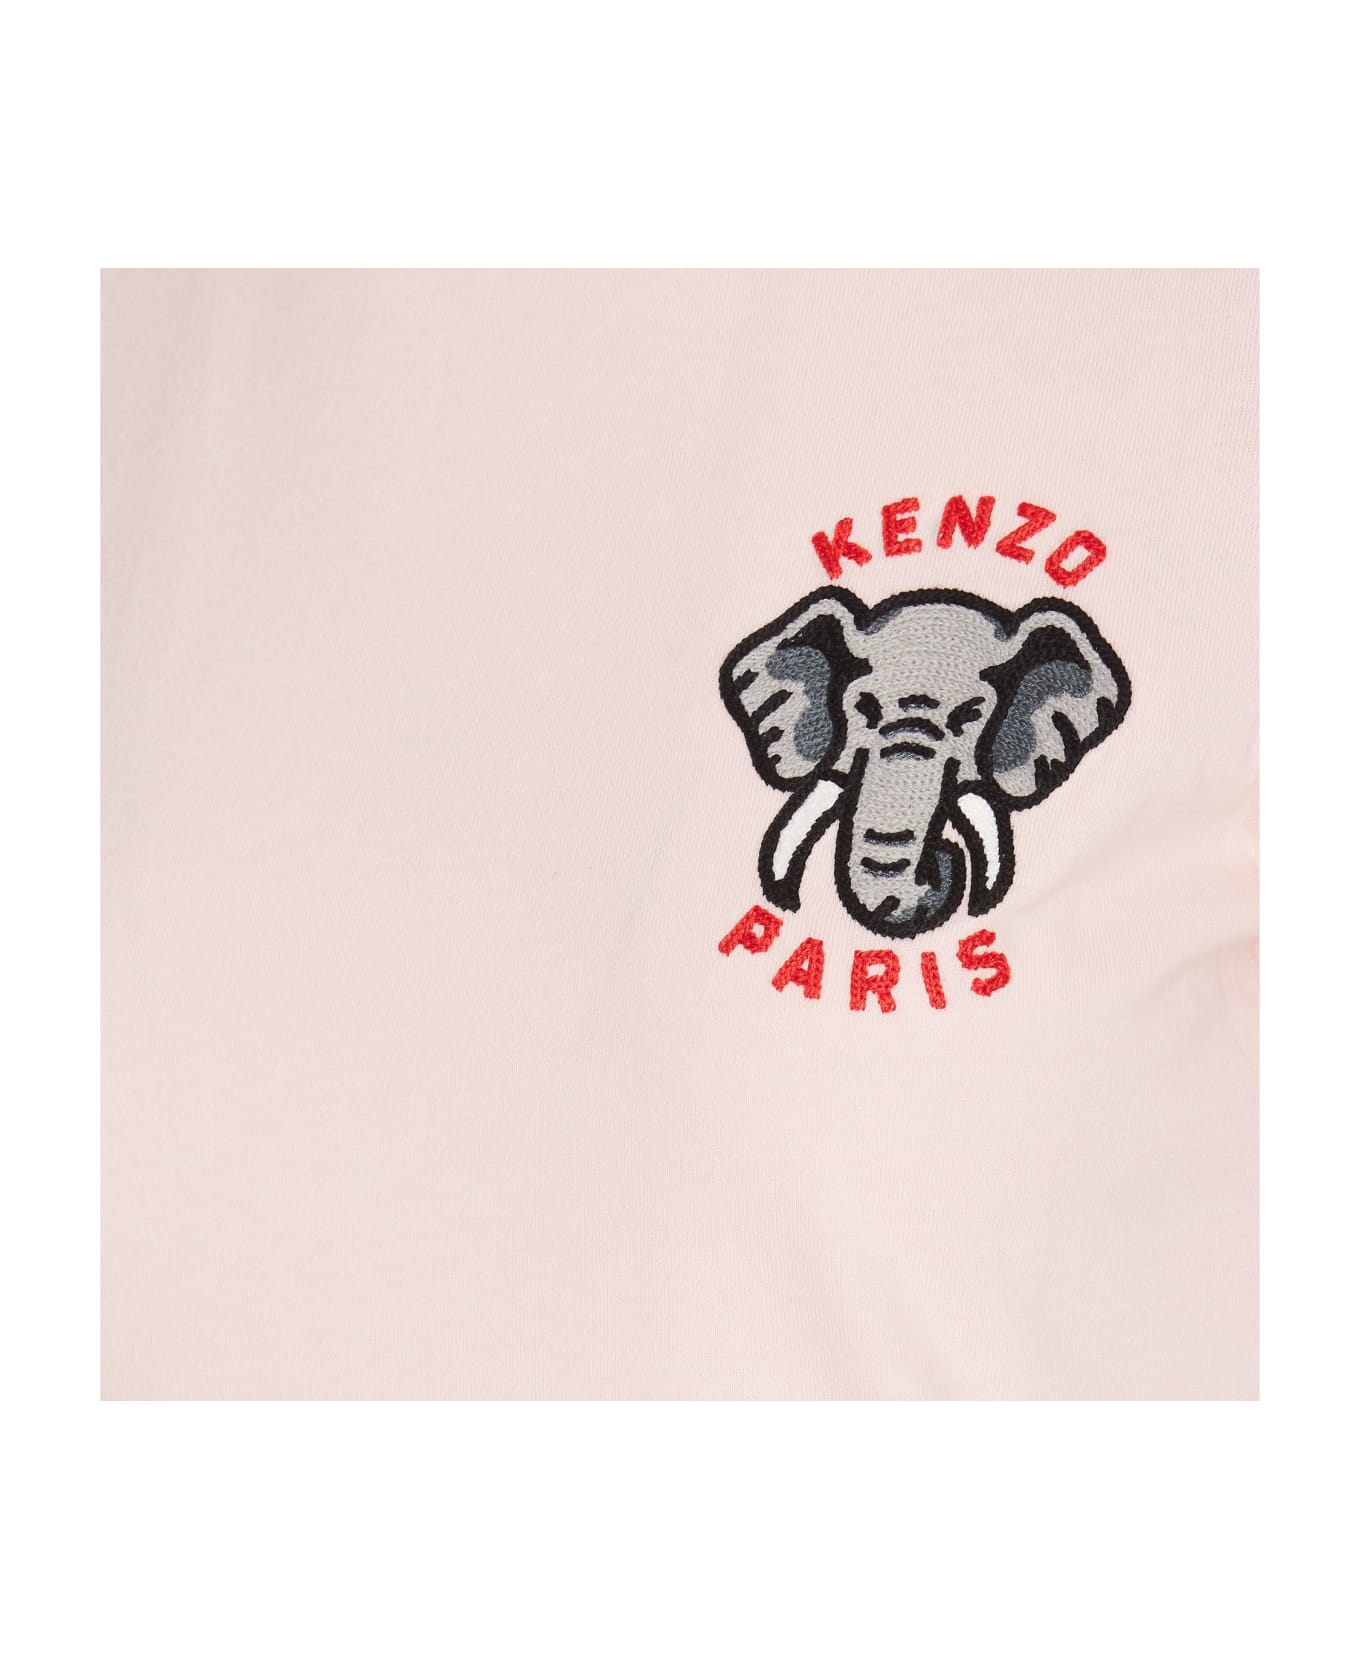 Kenzo Crest Elephant T-shirt - FADED PINK